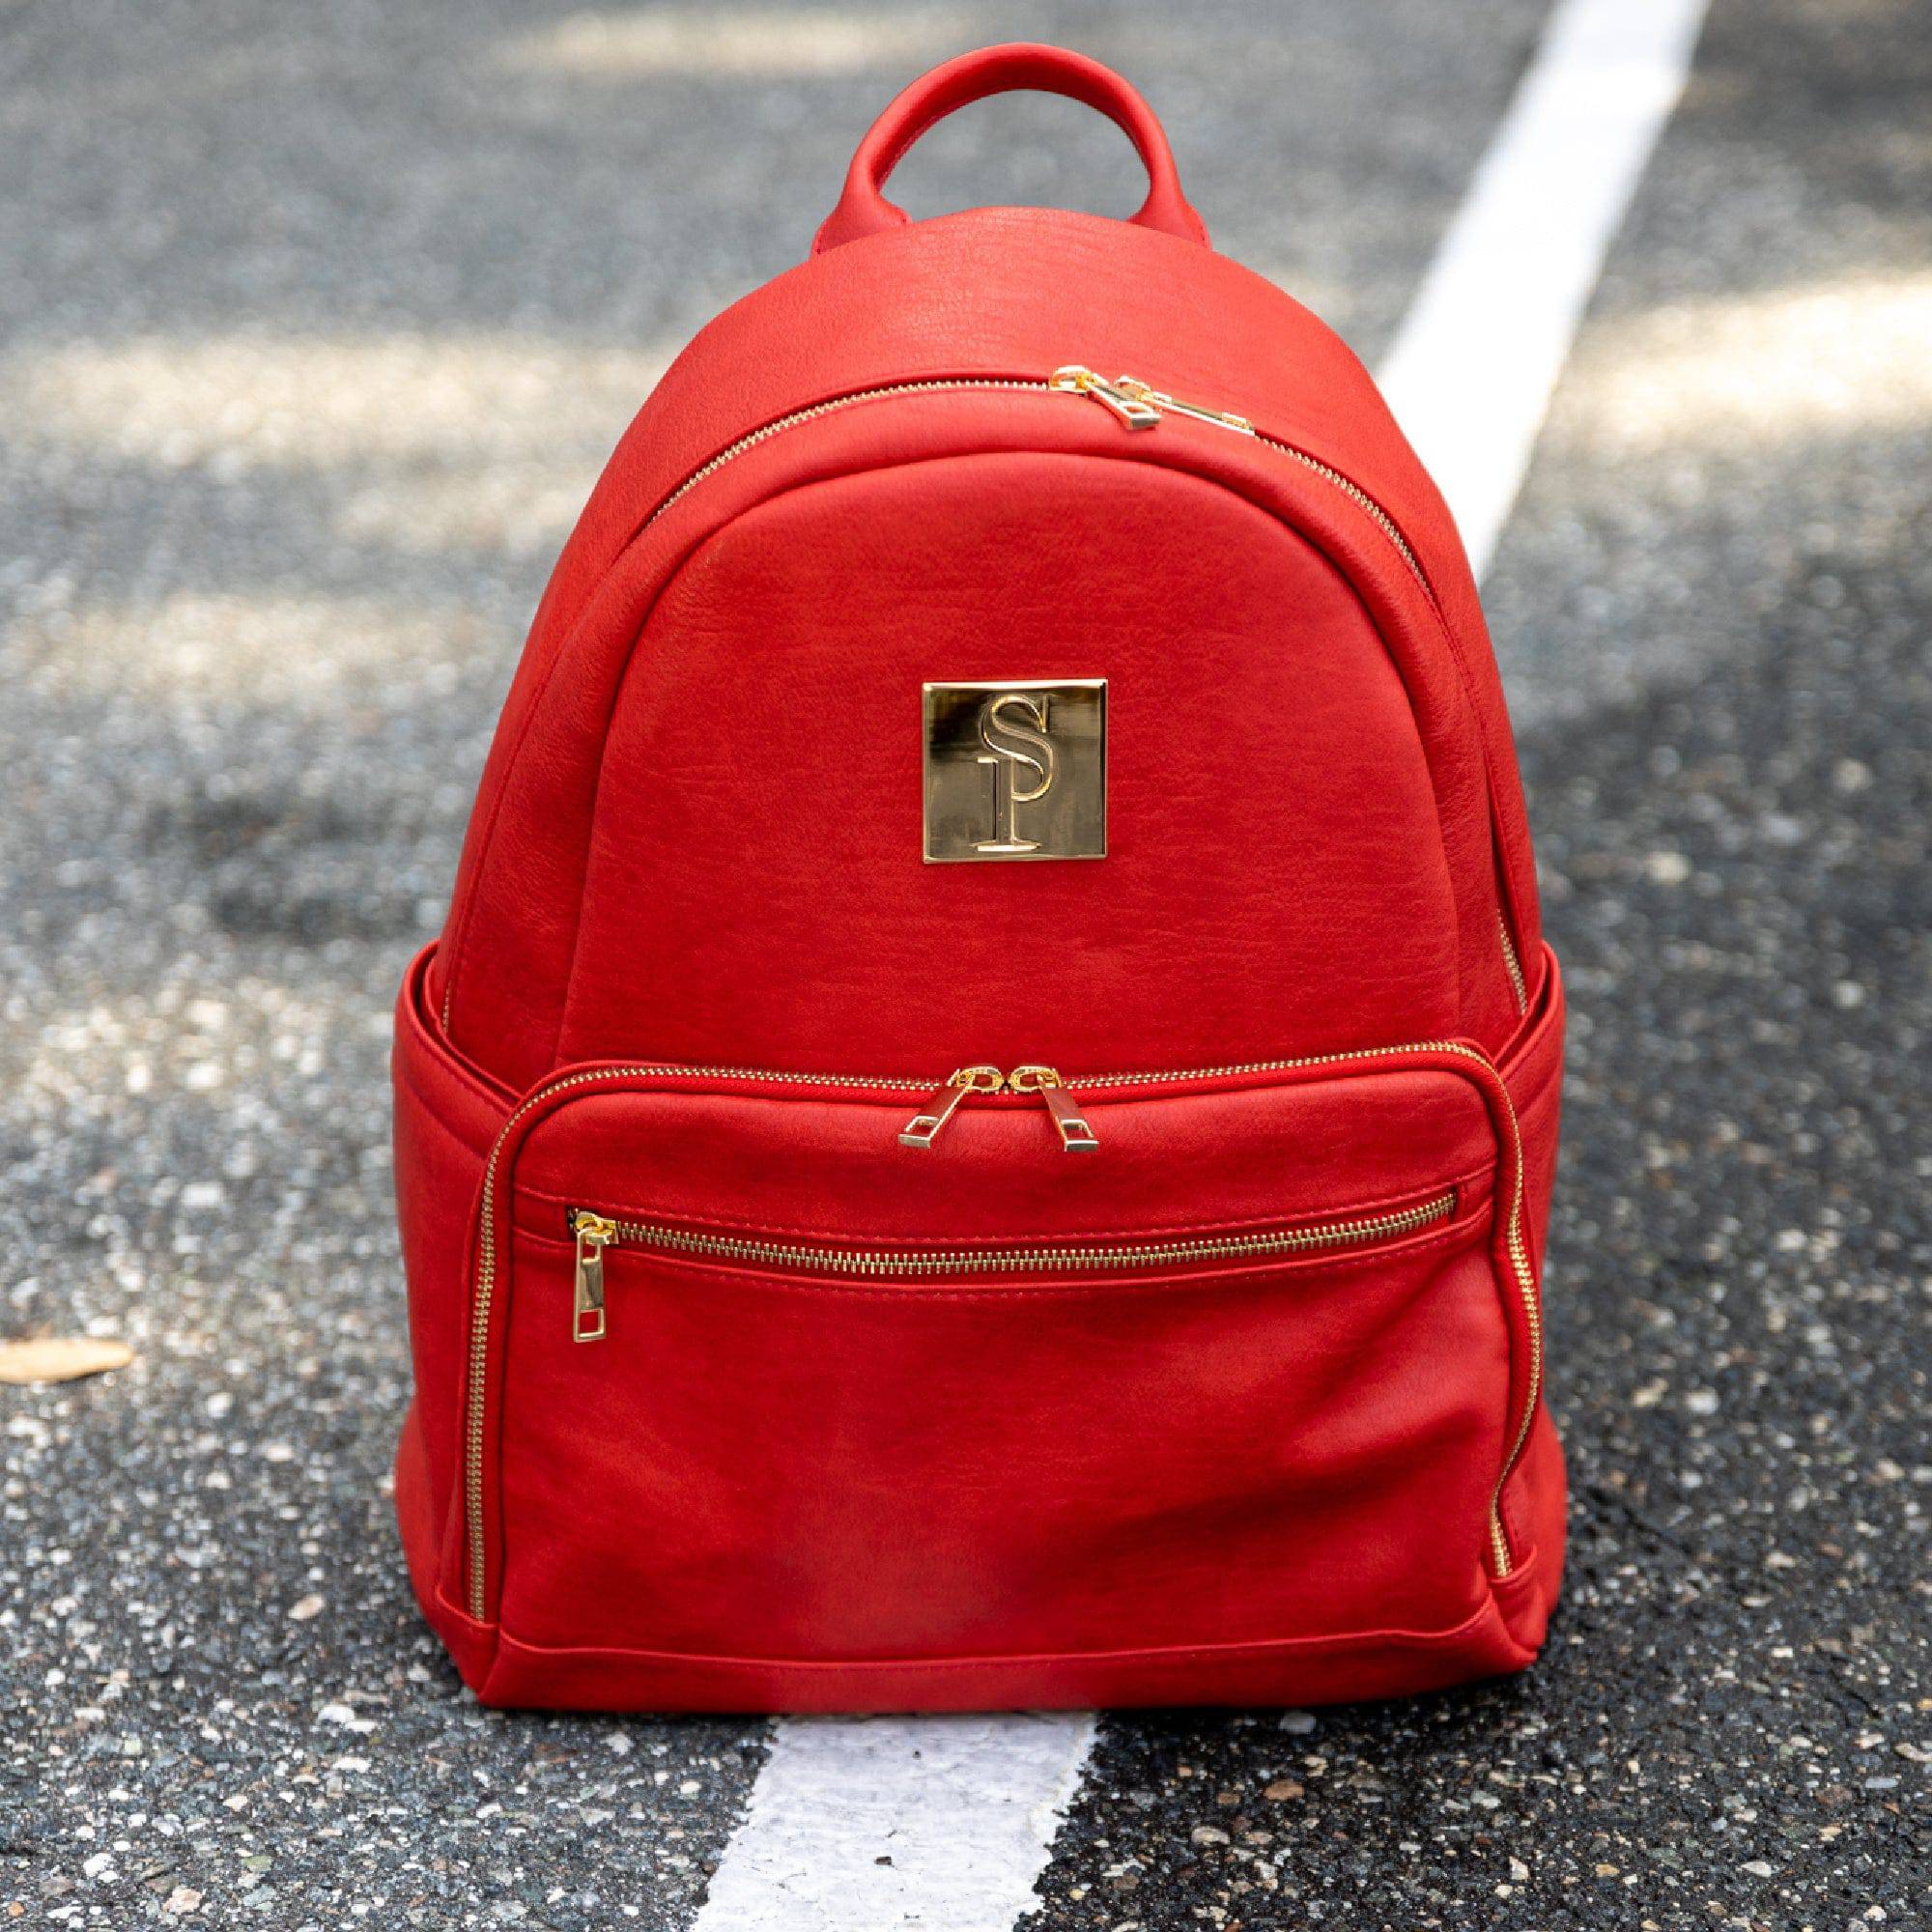 Red Carrier Bag